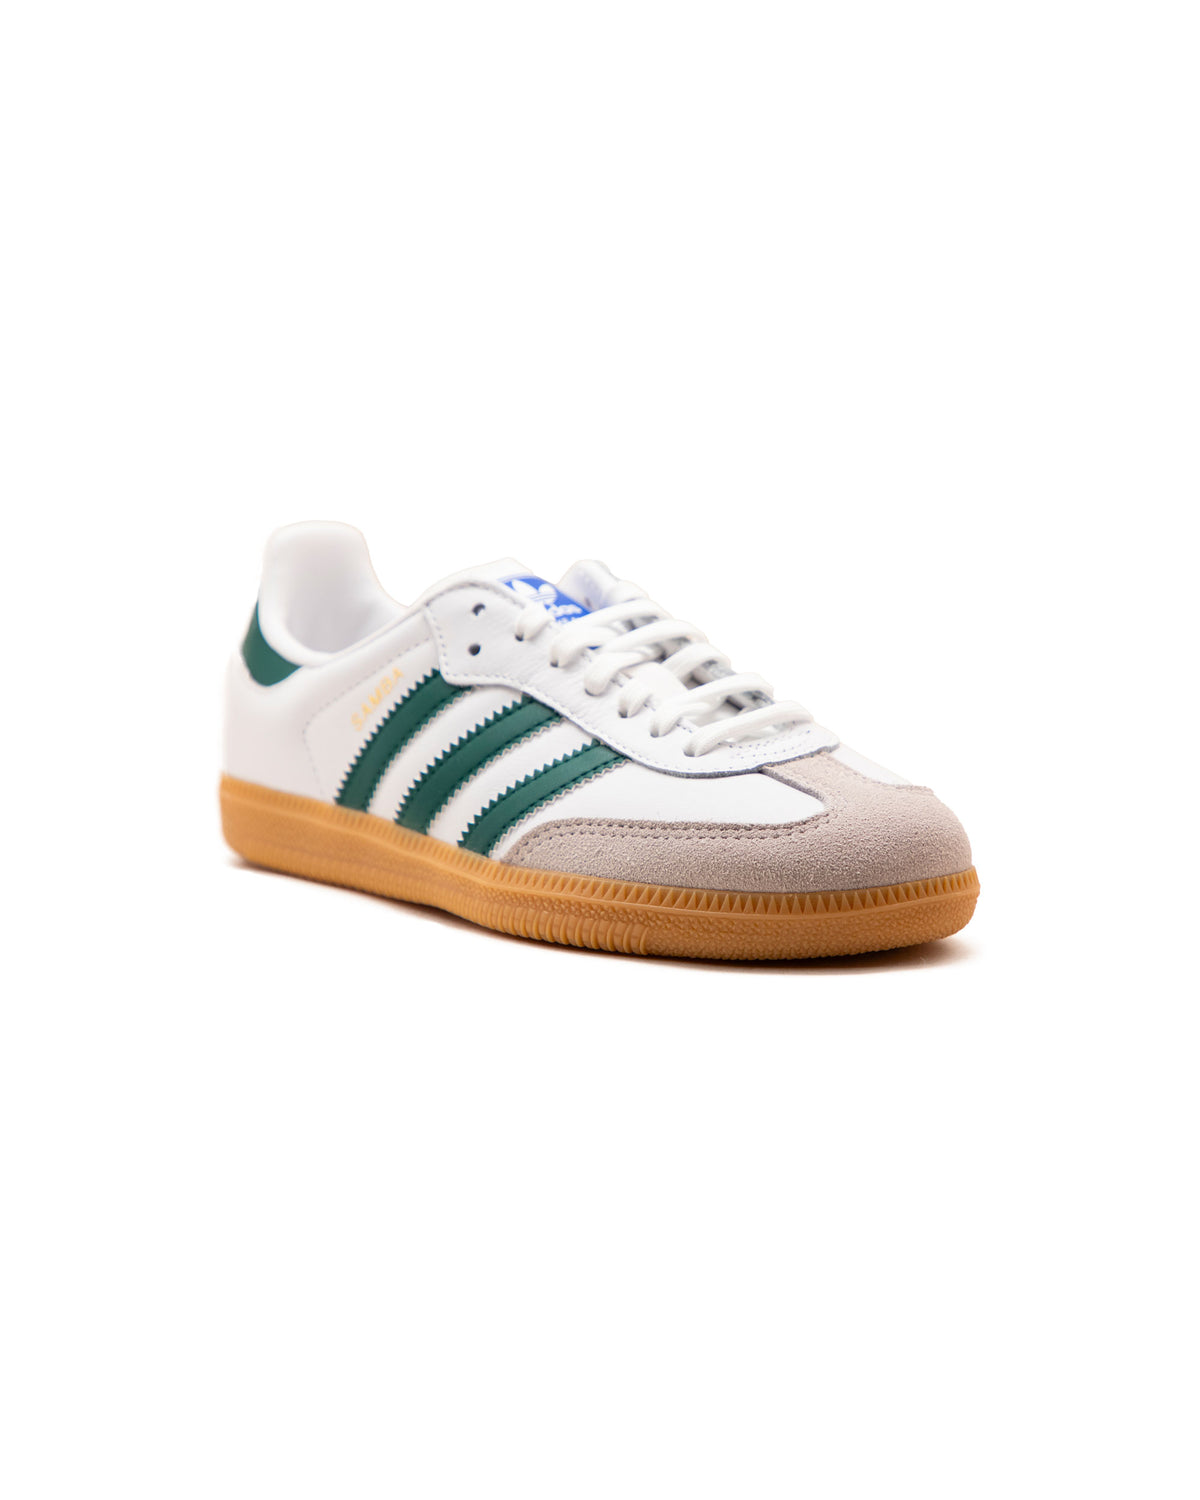 Adidas Samba OG C White Green